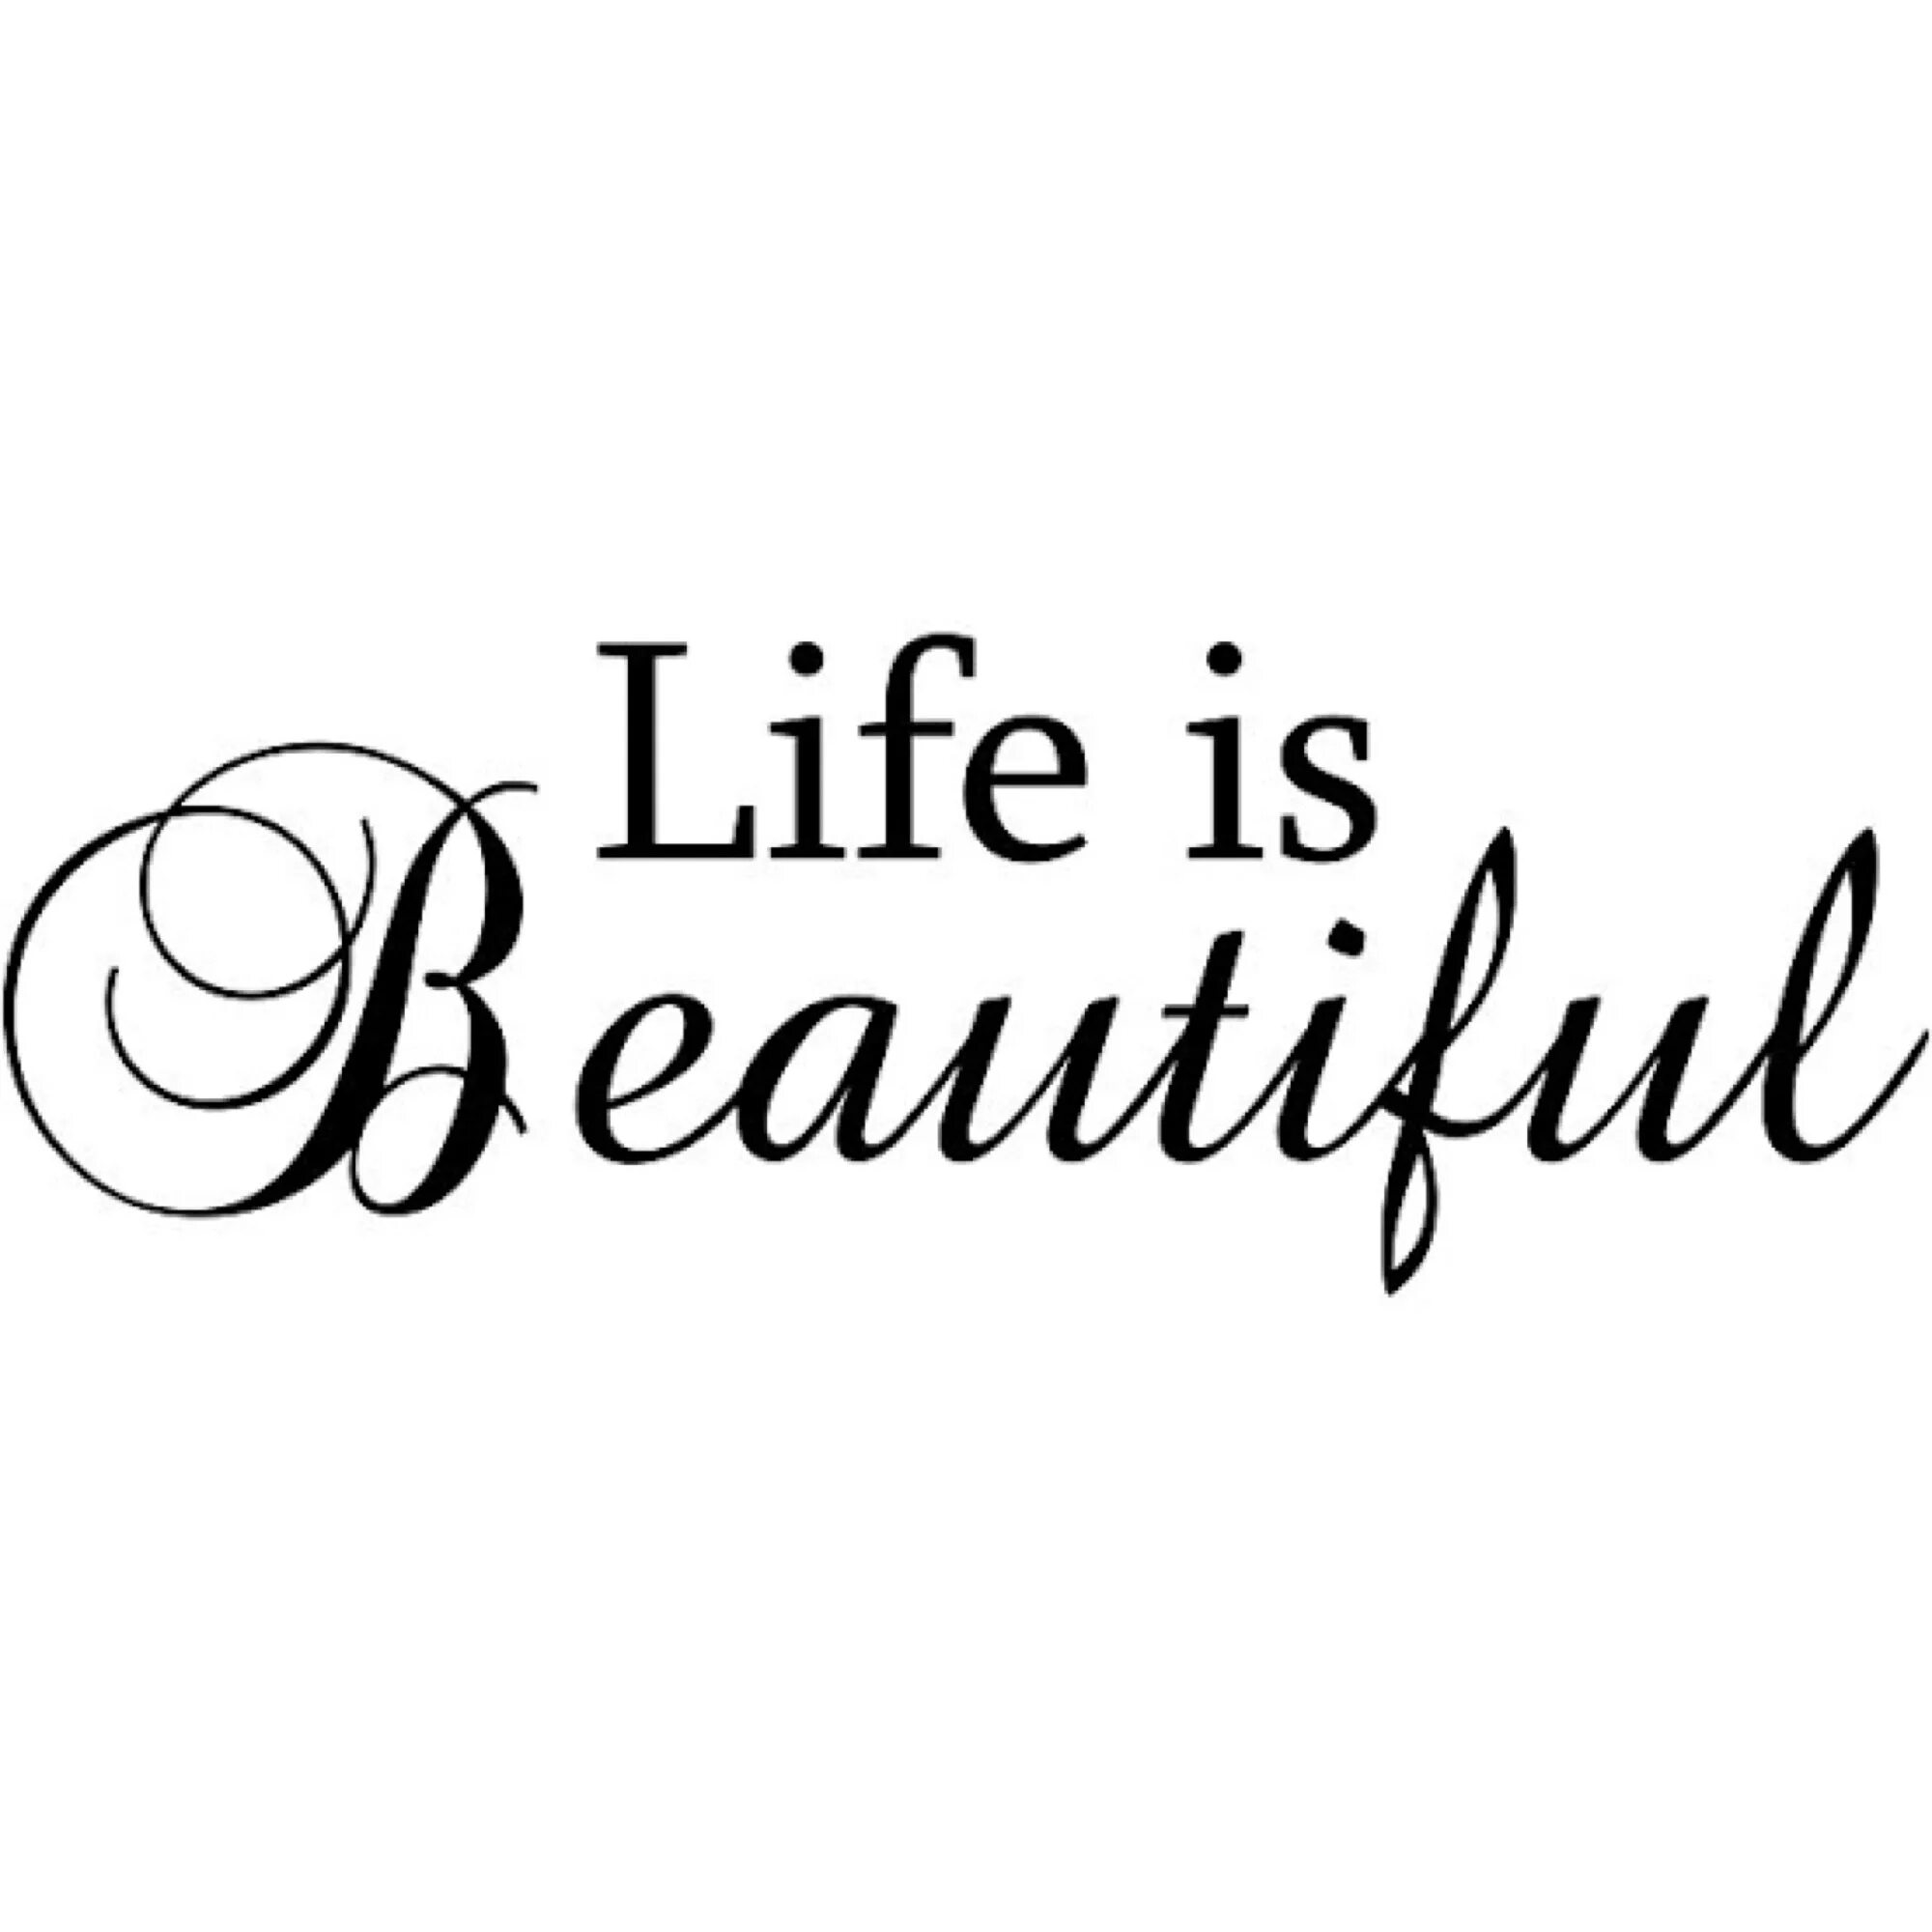 Life is beauty. Life is beautiful надпись. Красивые надписи на английском. Life is beautiful красивая надпись. Красивые надписи Life and beautiful.